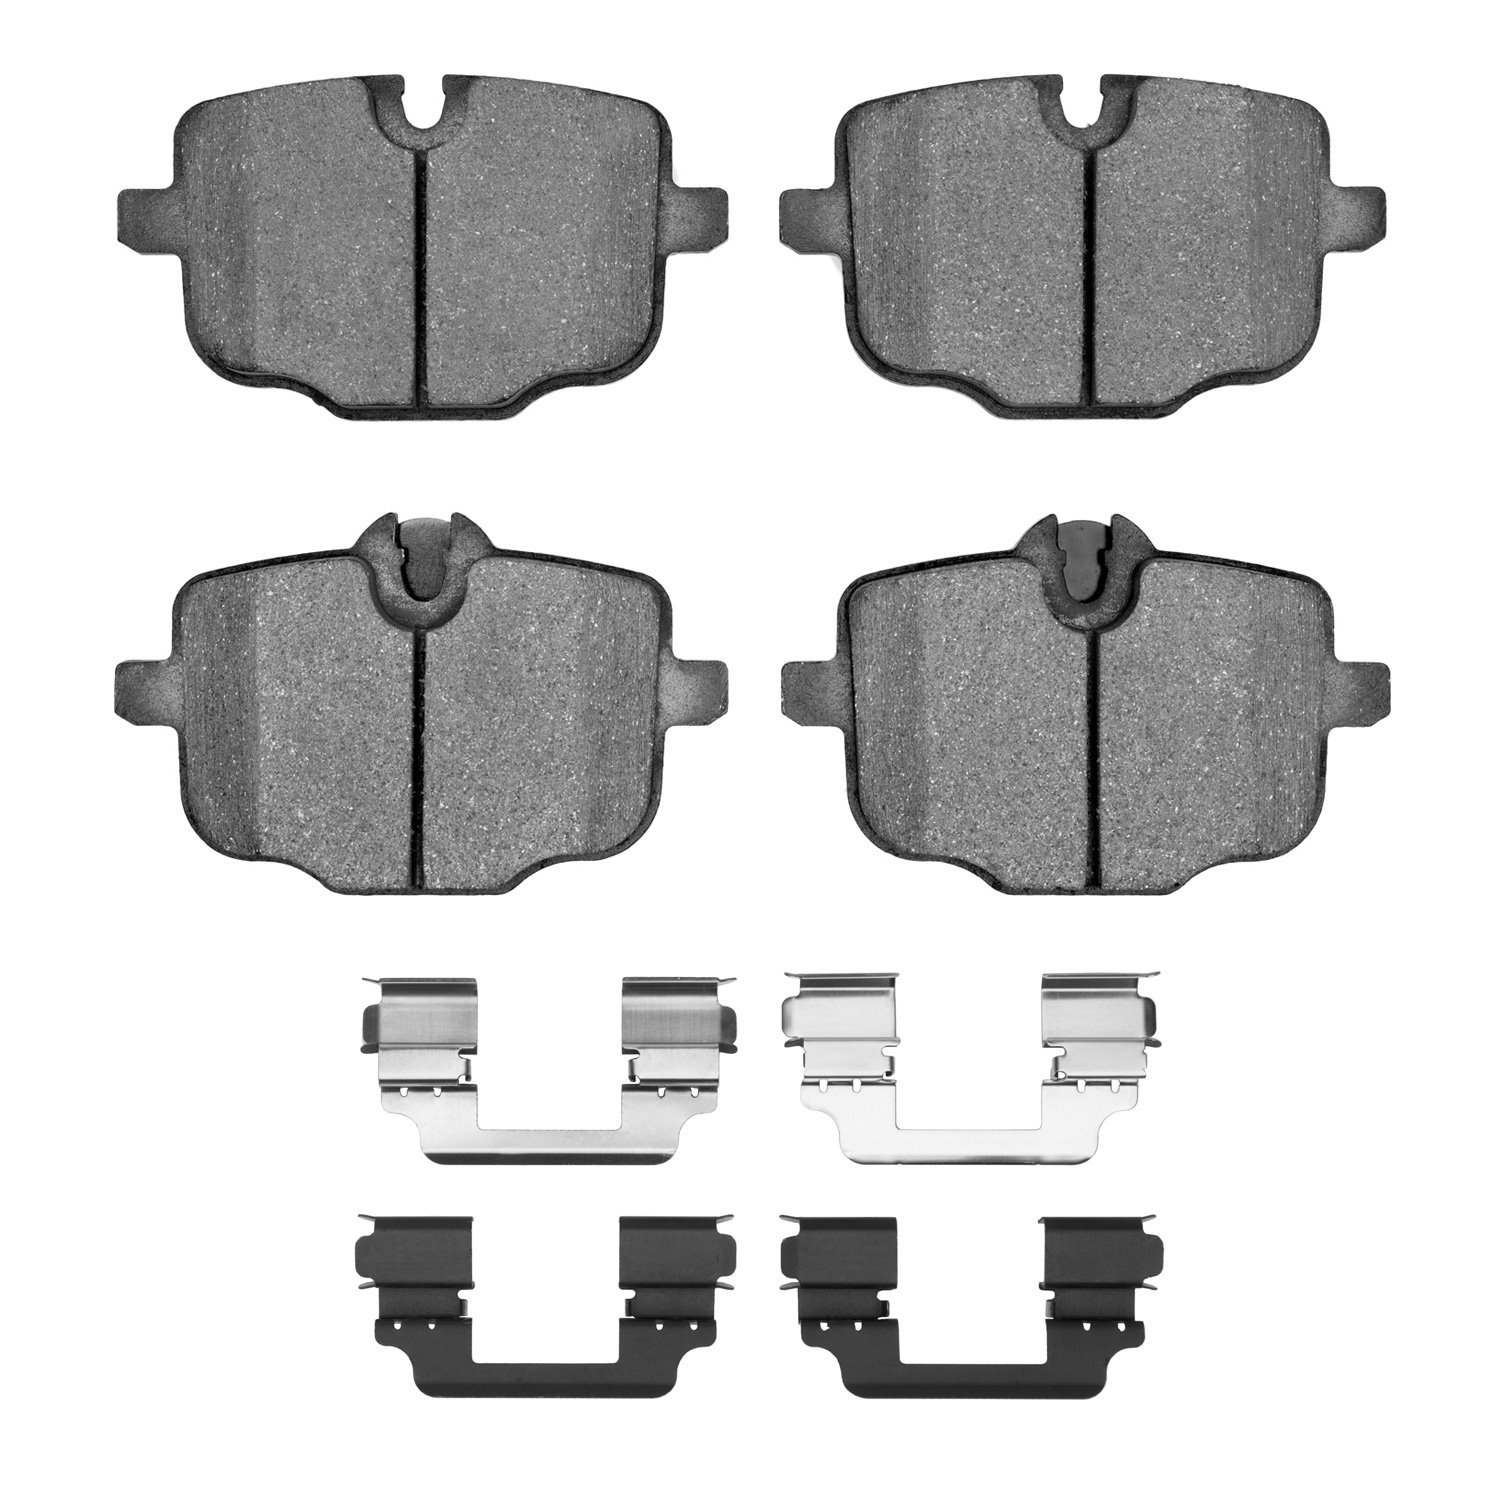 1311-1850-01 3000-Series Semi-Metallic Brake Pads & Hardware Kit, Fits Select BMW, Position: Rear